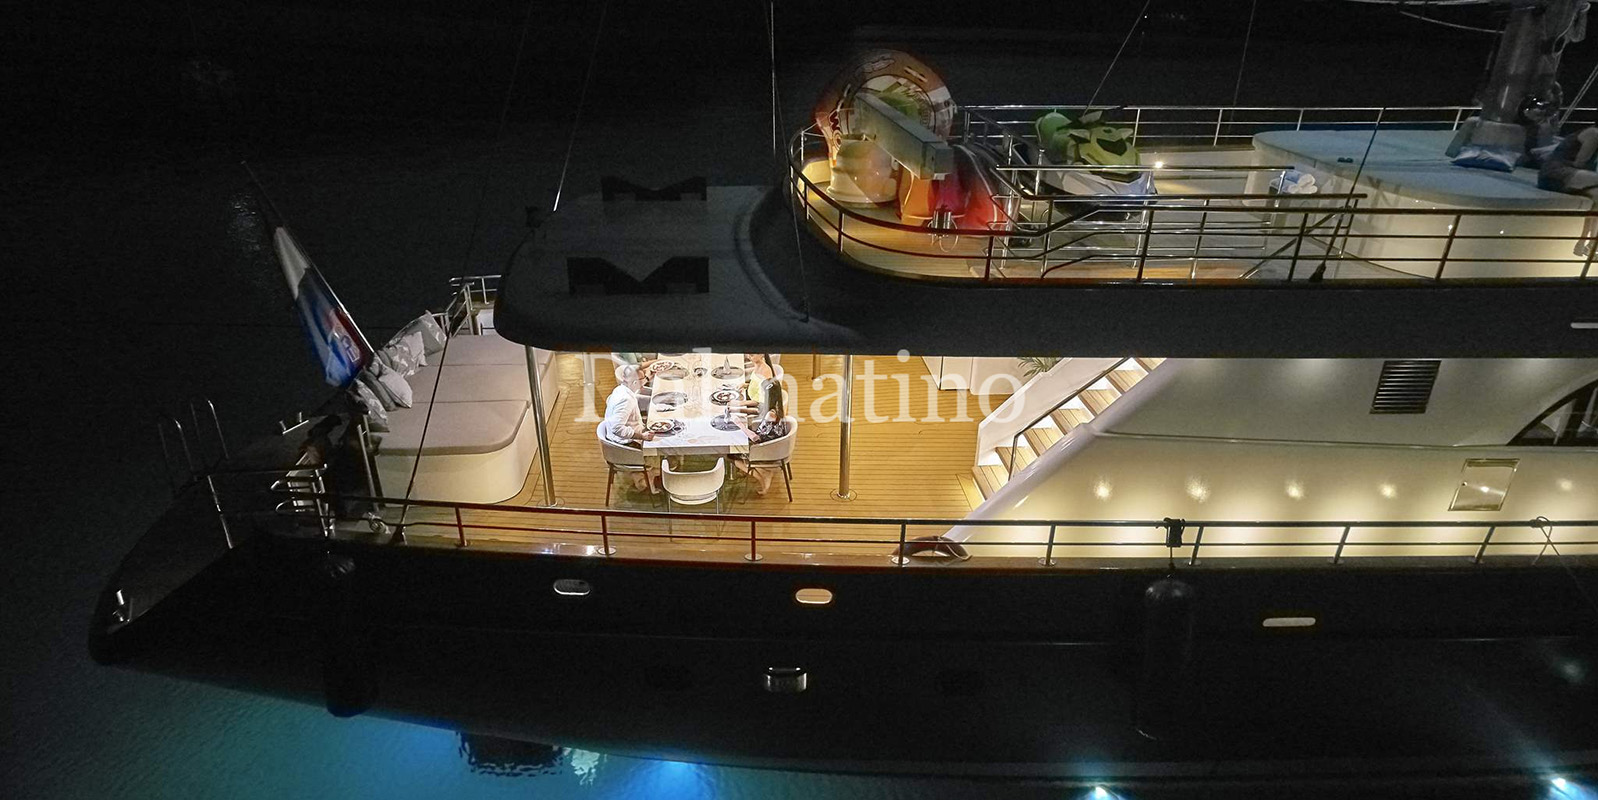 Croatia's New Luxury Sail Yacht Charter Concept